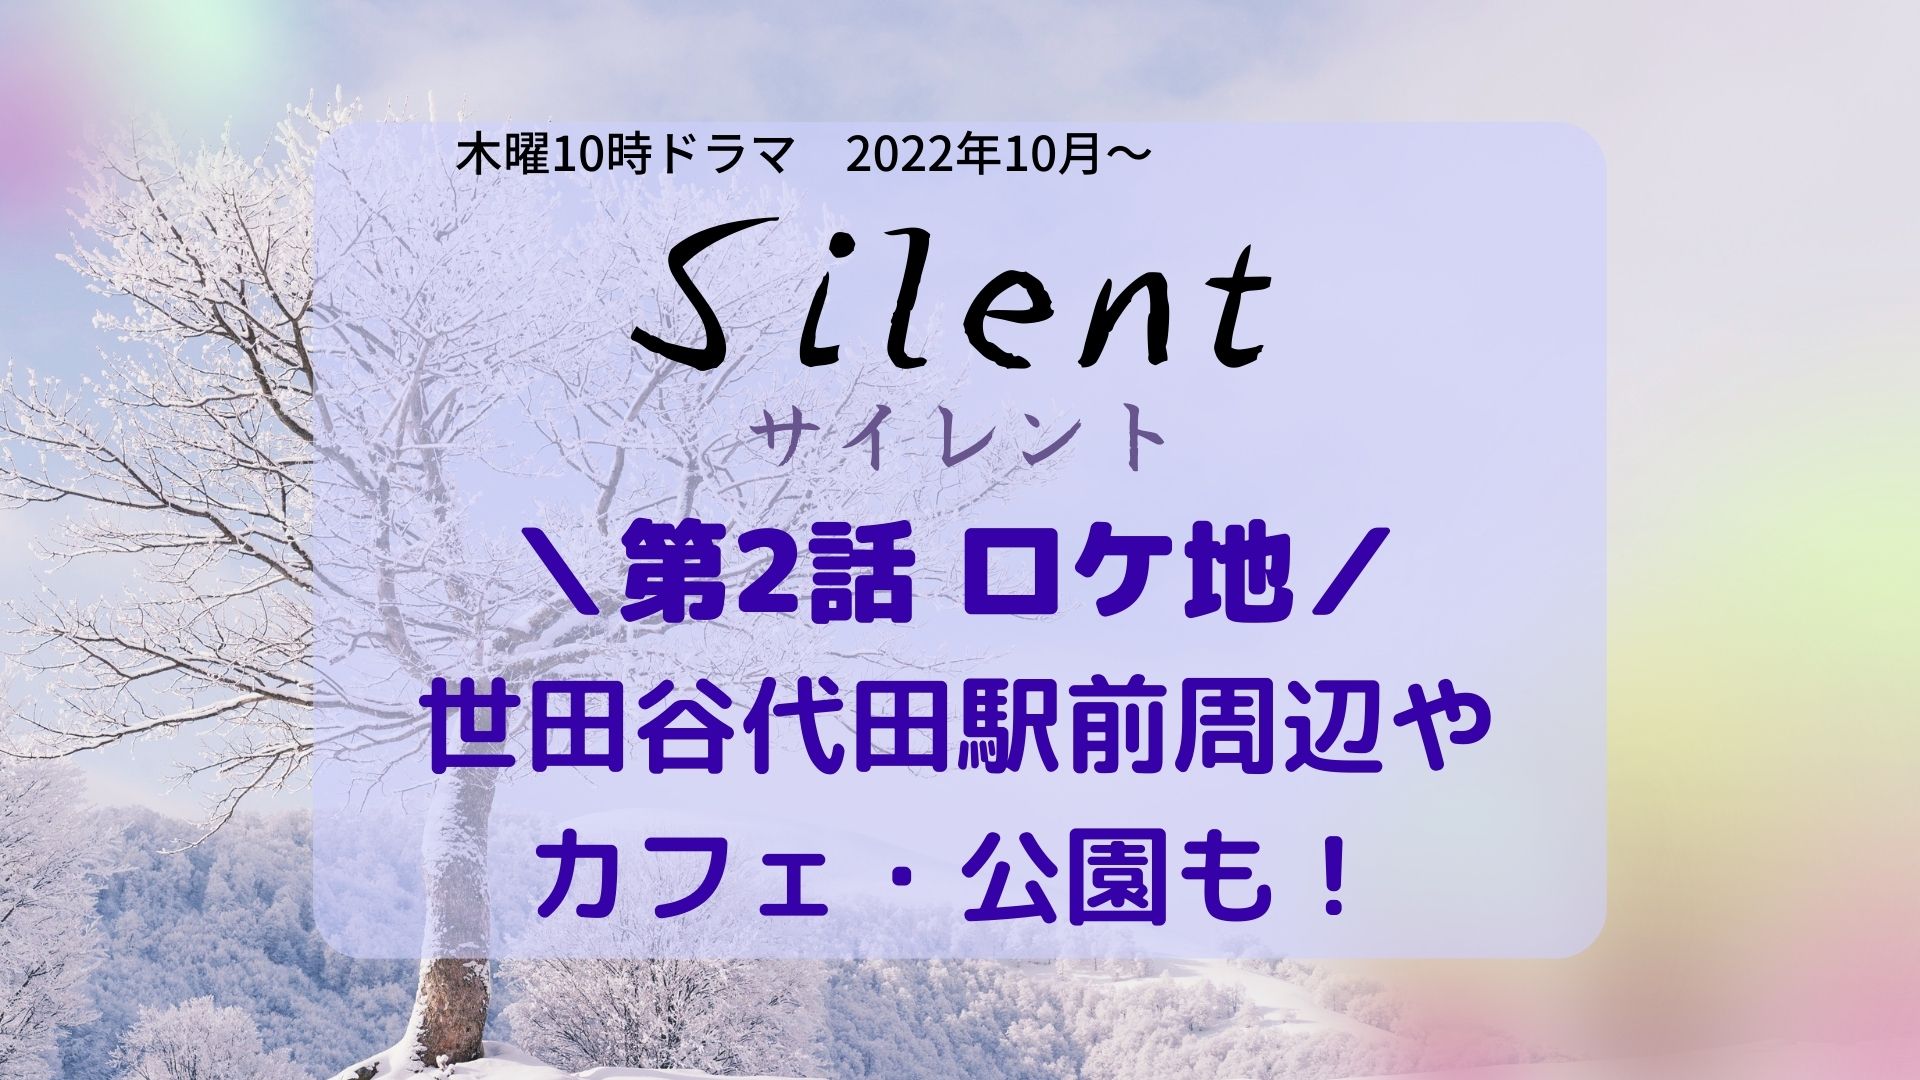 Silent(サイレント)2話ロケ地